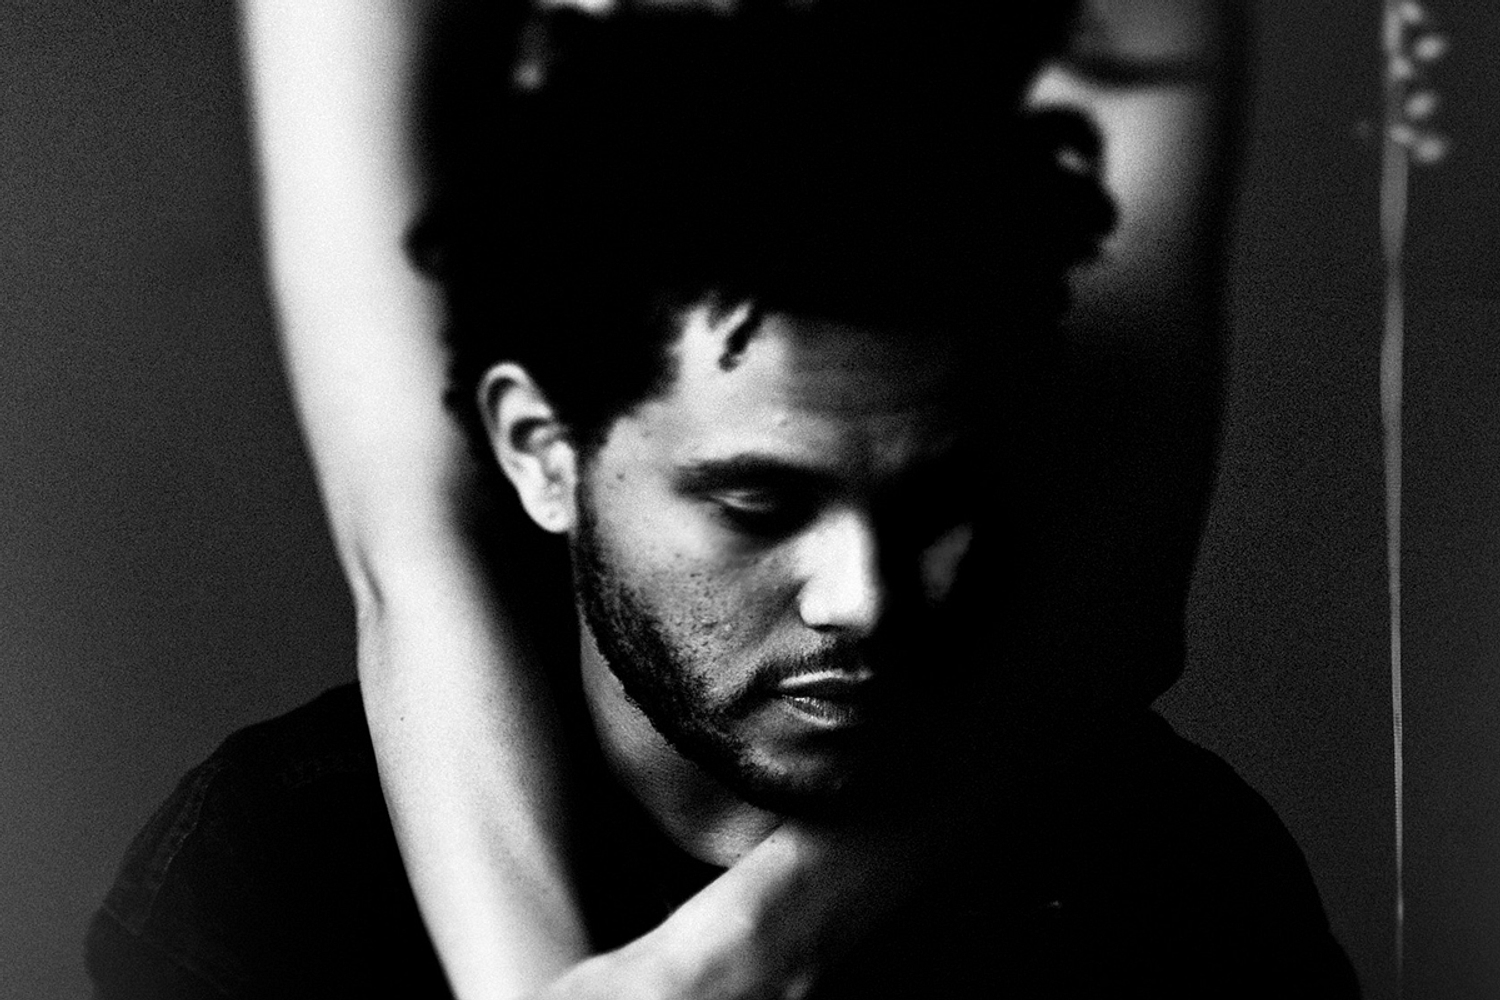 The Weeknd's headlining Roskilde